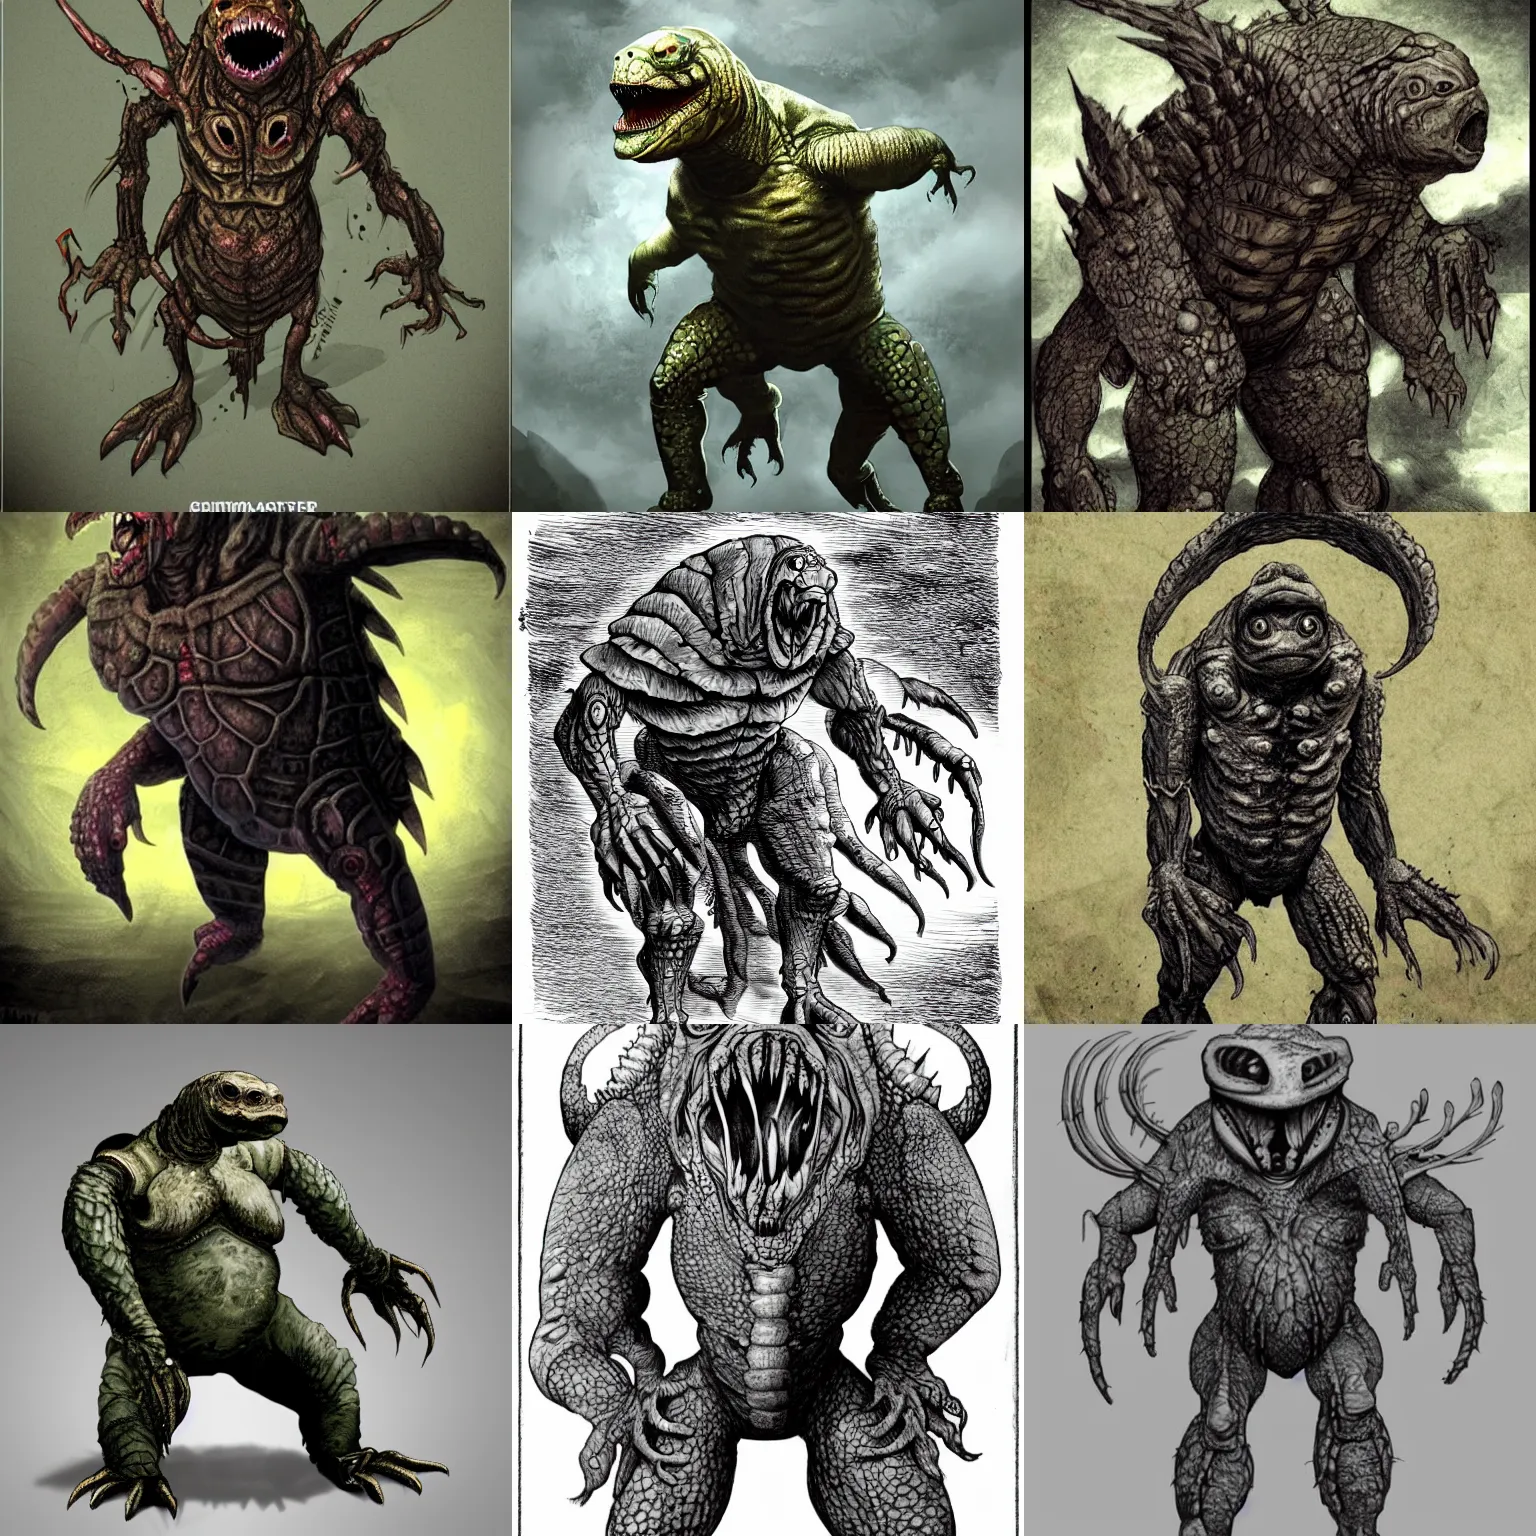 Prompt: humanoid turtle monster, grimdark, gruesome